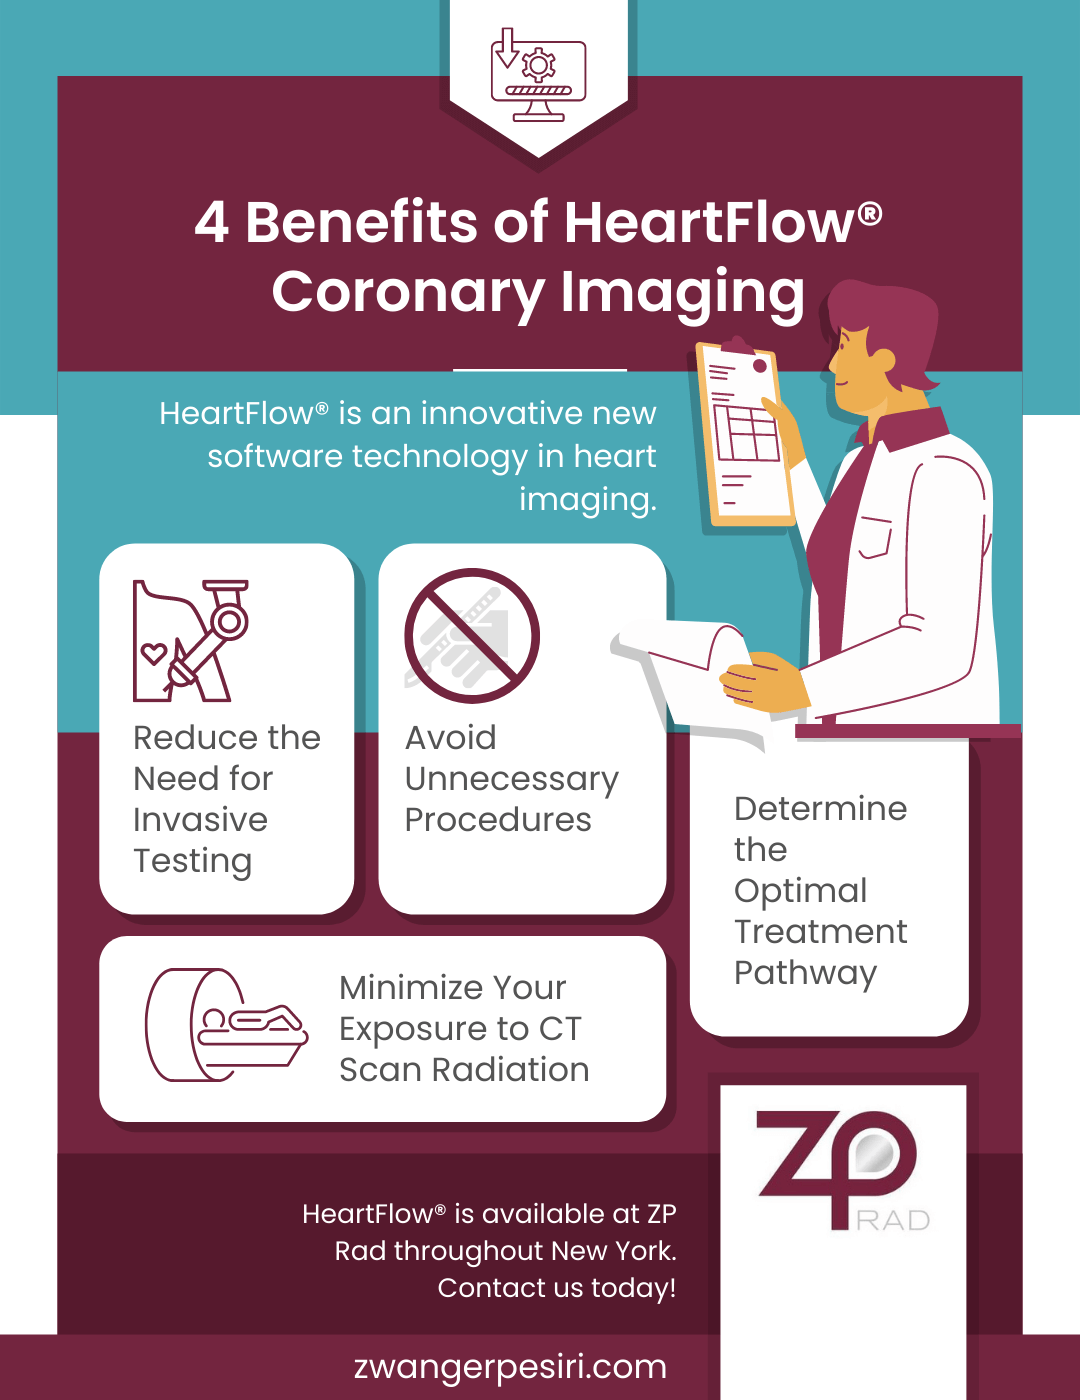 4 Benefits of HeartFlow Coronary Imaging Infographic